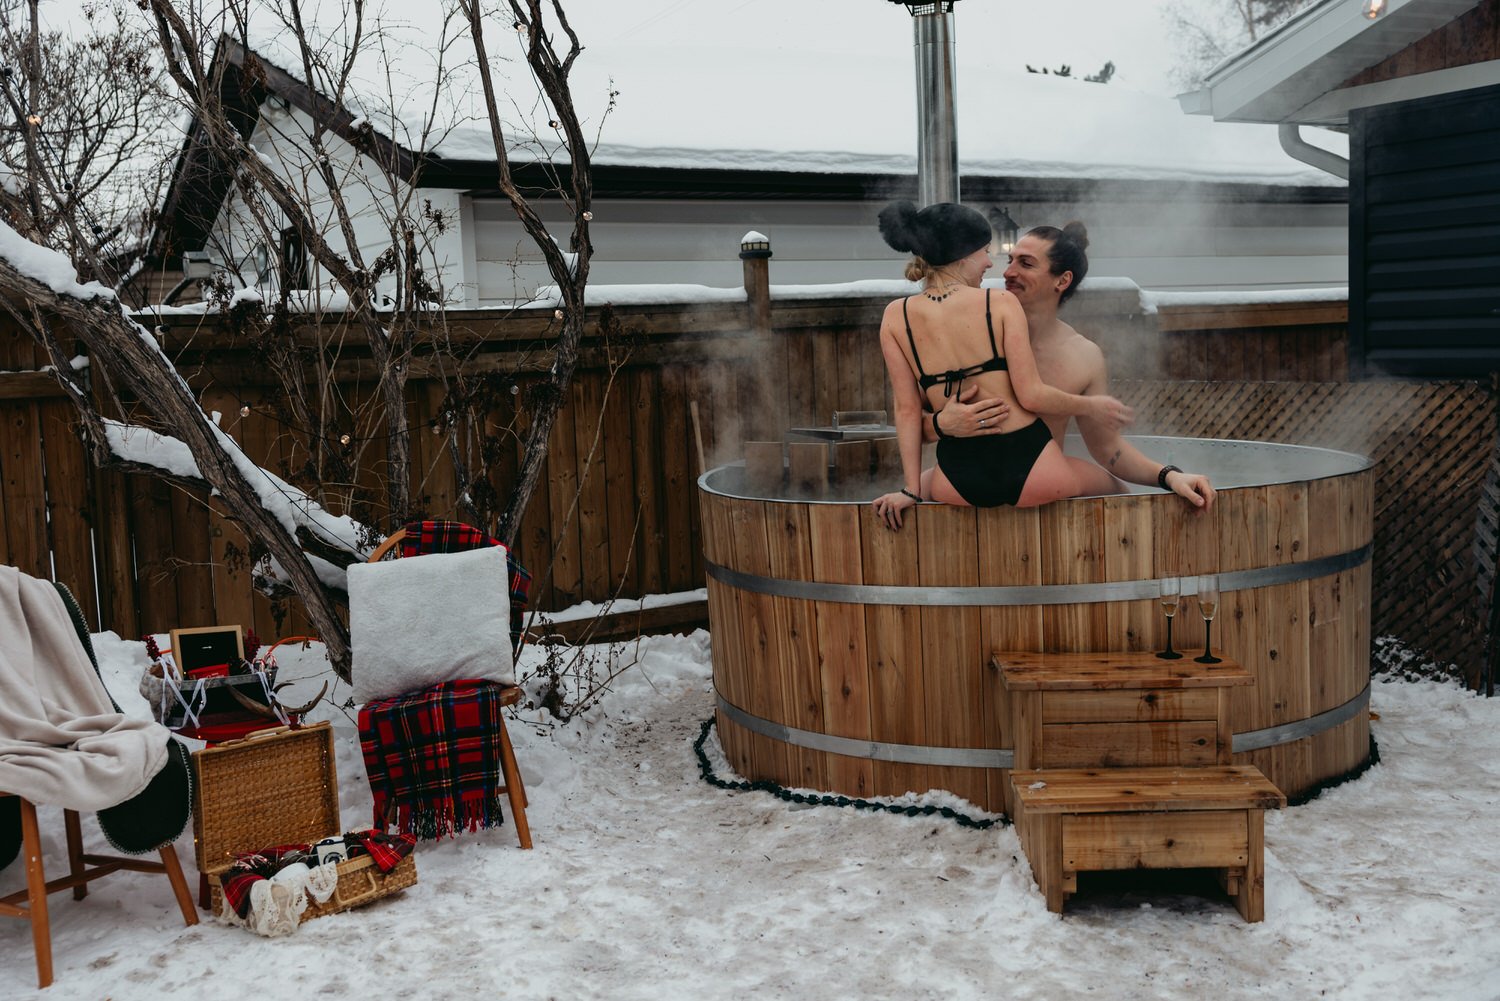 YEG Hot Tub Parties - Allie Knull's Photography - Elopement Photographer-38.jpg